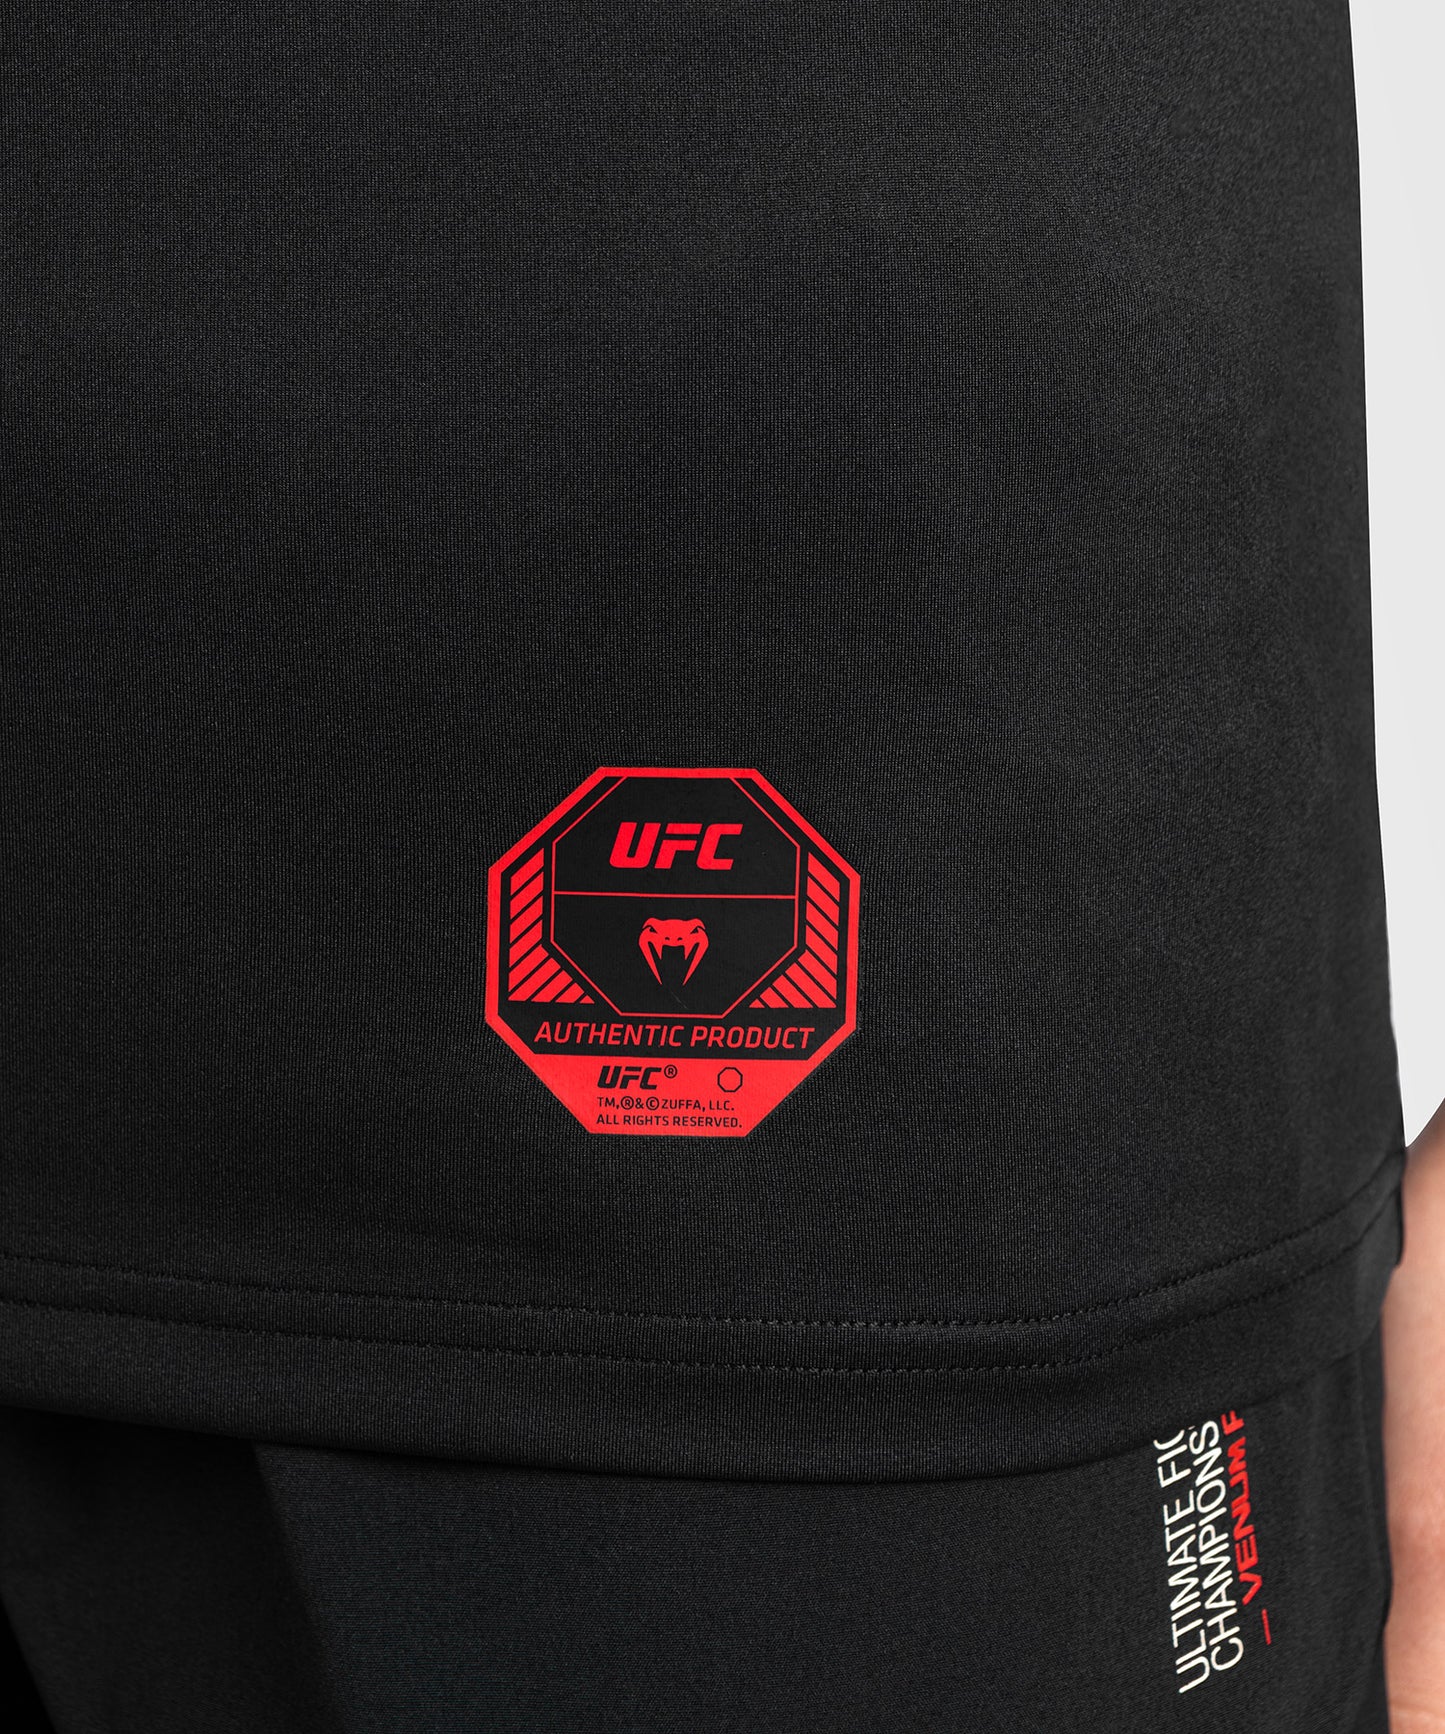 Khaki Venum UFC Adrenaline Dry Tech T-Shirt from Made4Fighters